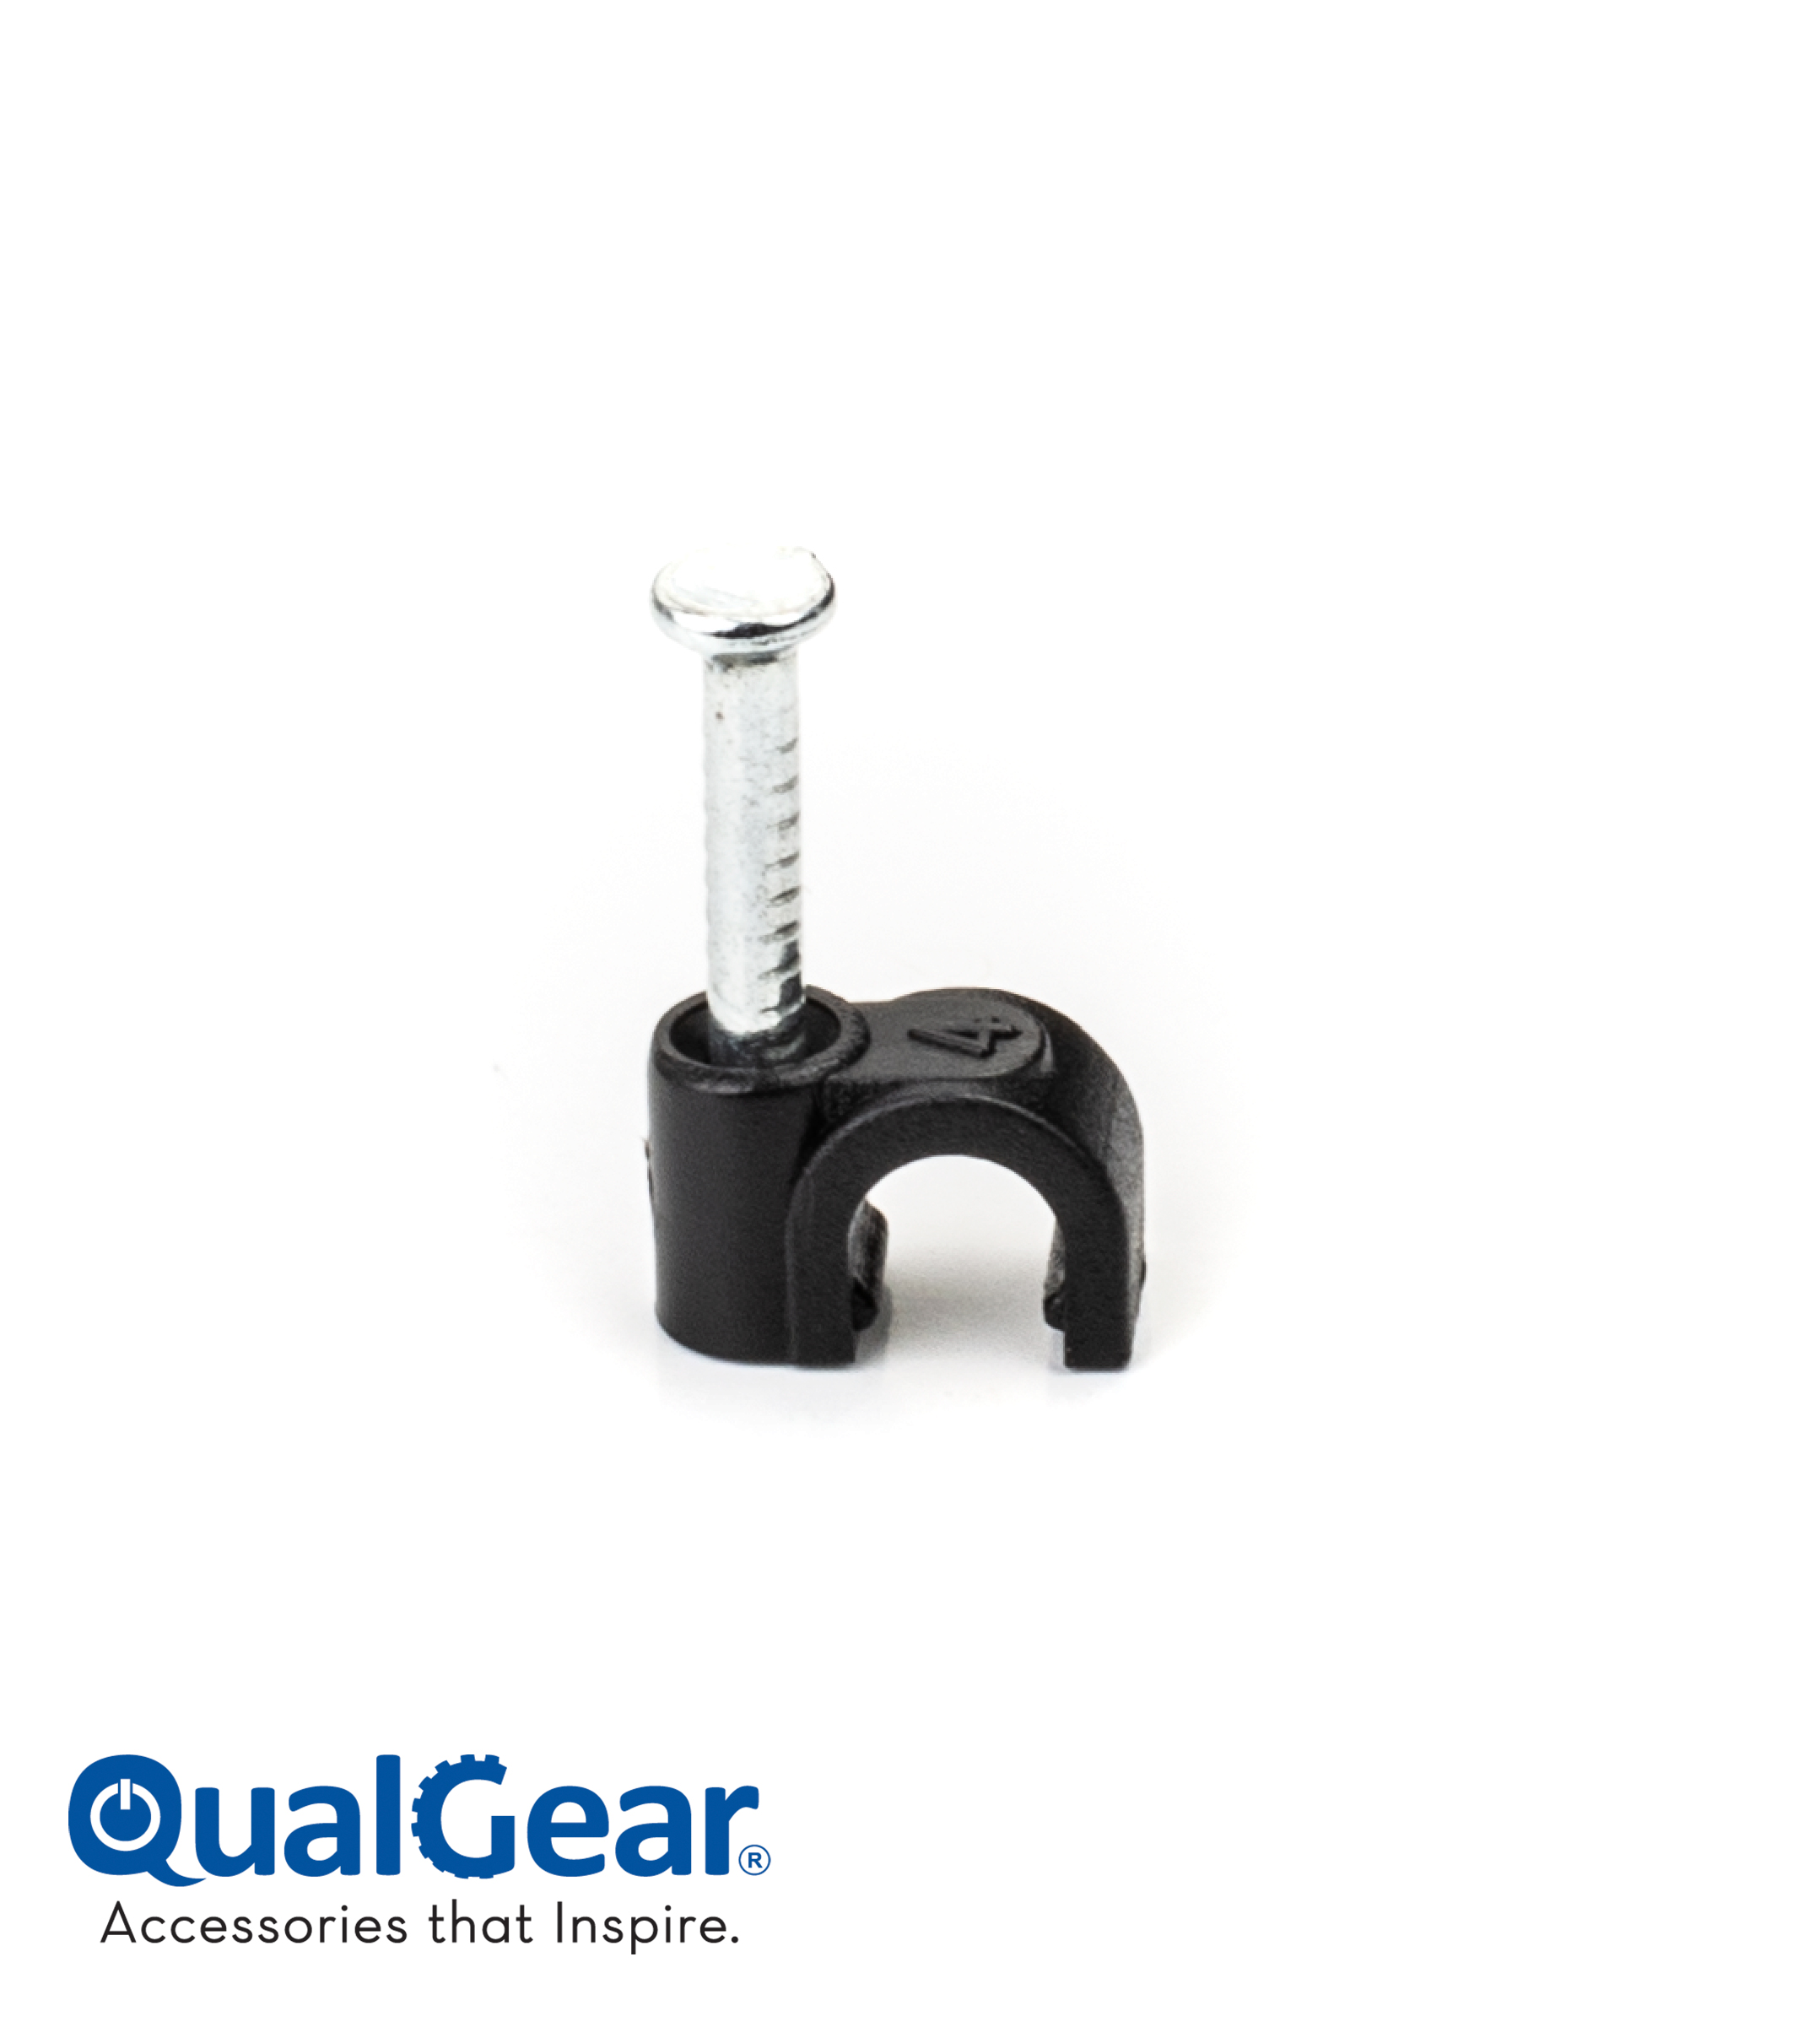 QualGear 4mm Cable Clips, Black, 100 Pack, CC4-B-100-P